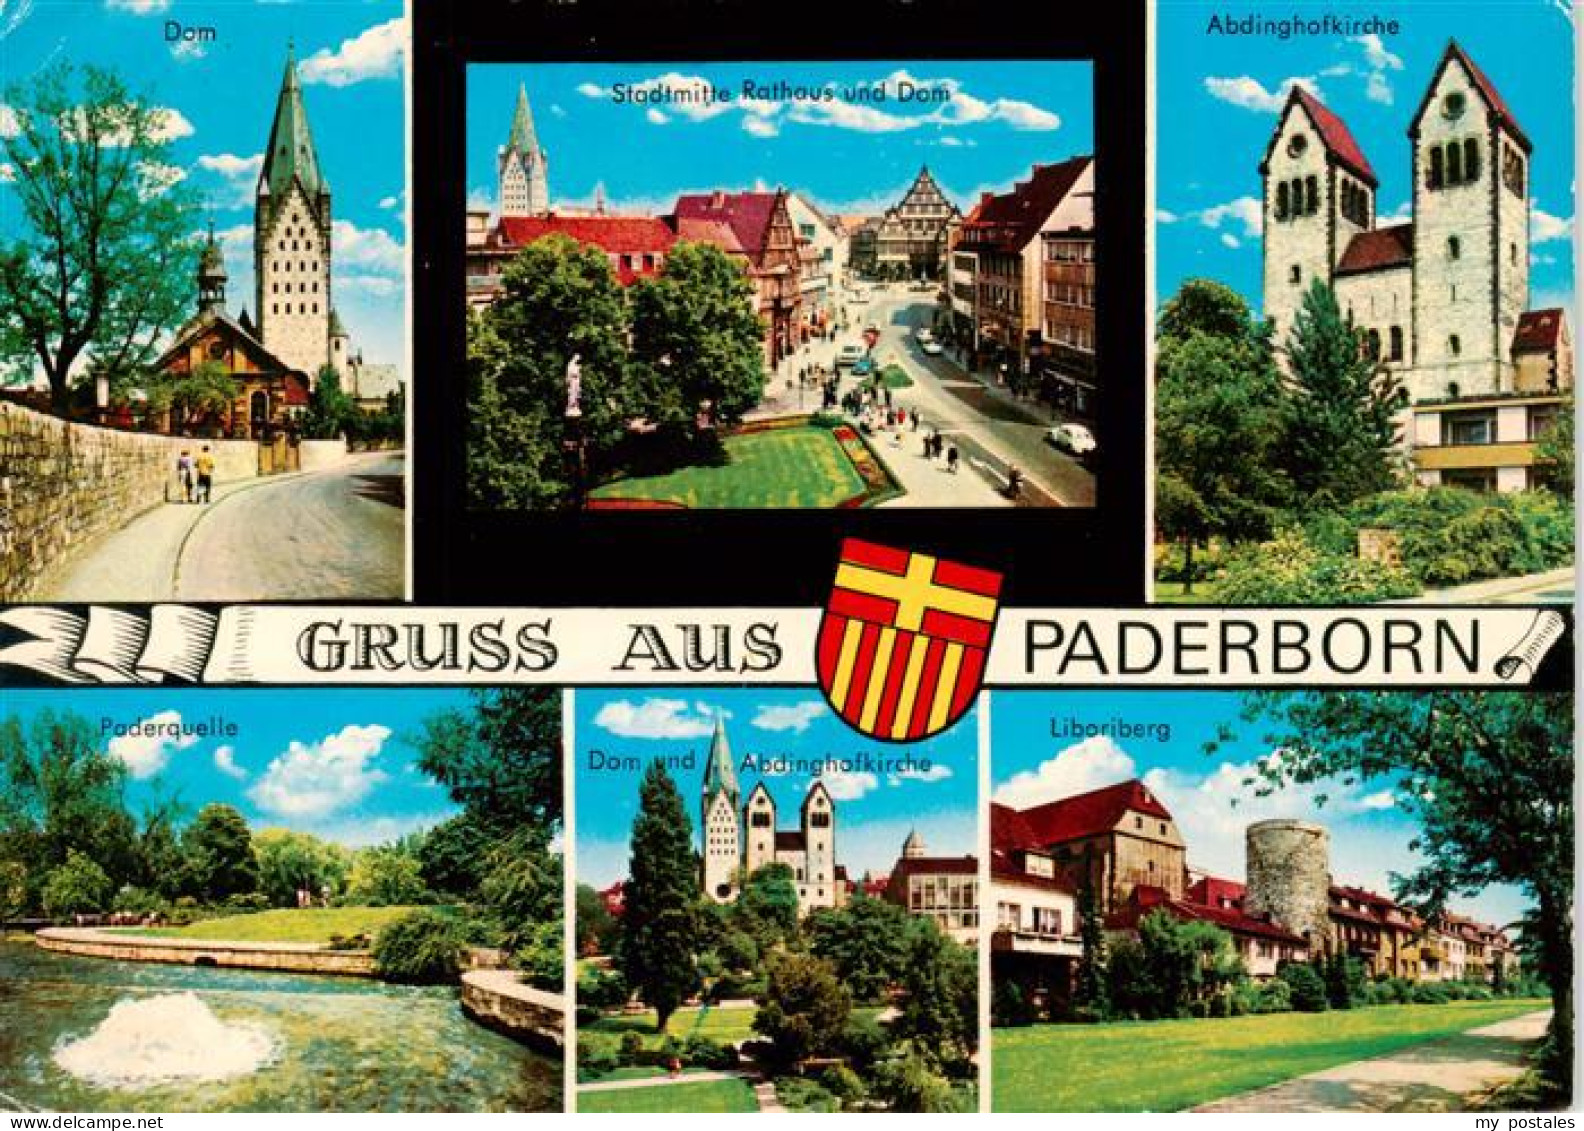 73934127 Paderborn Dom Stadtmitte Abdinghofkirche Paderquelle Dom Und Abdinghofk - Paderborn